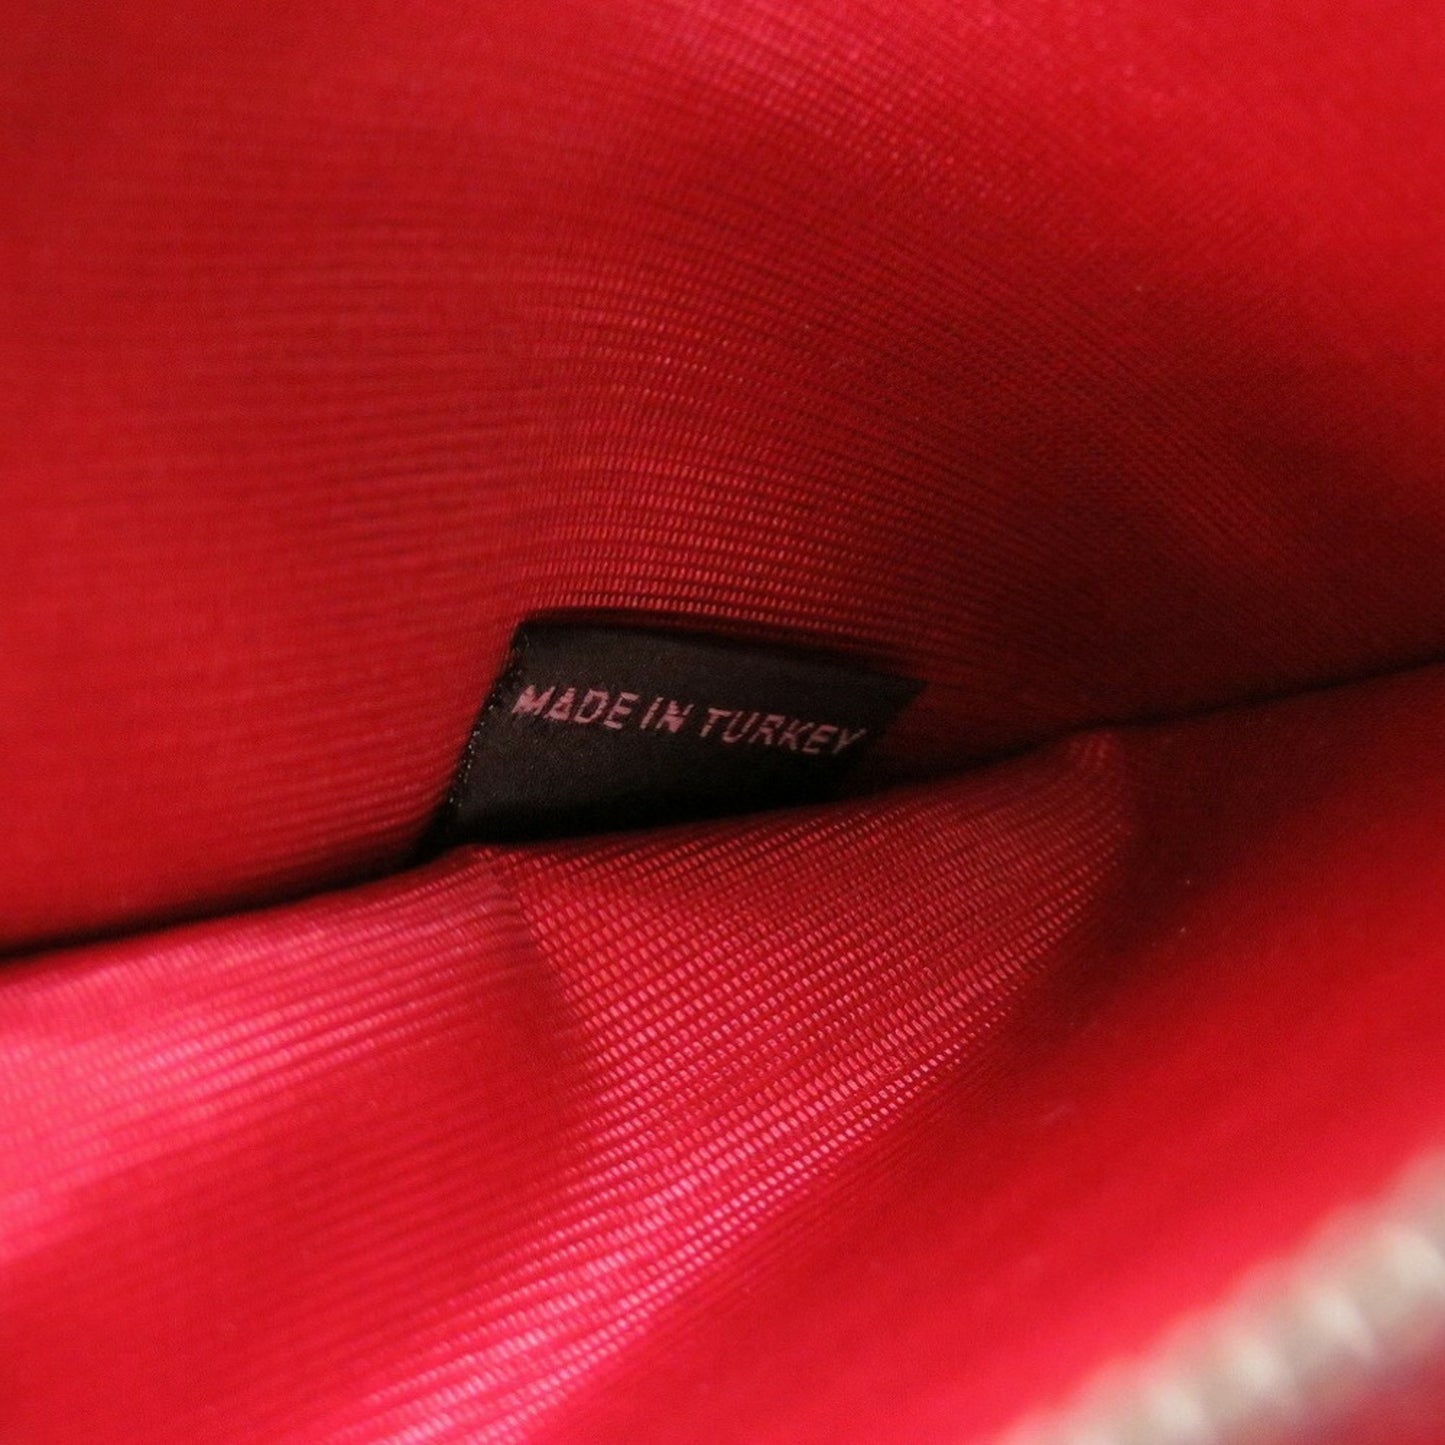 Miu Miu Women's Leather Miu Miu Wallet in Red